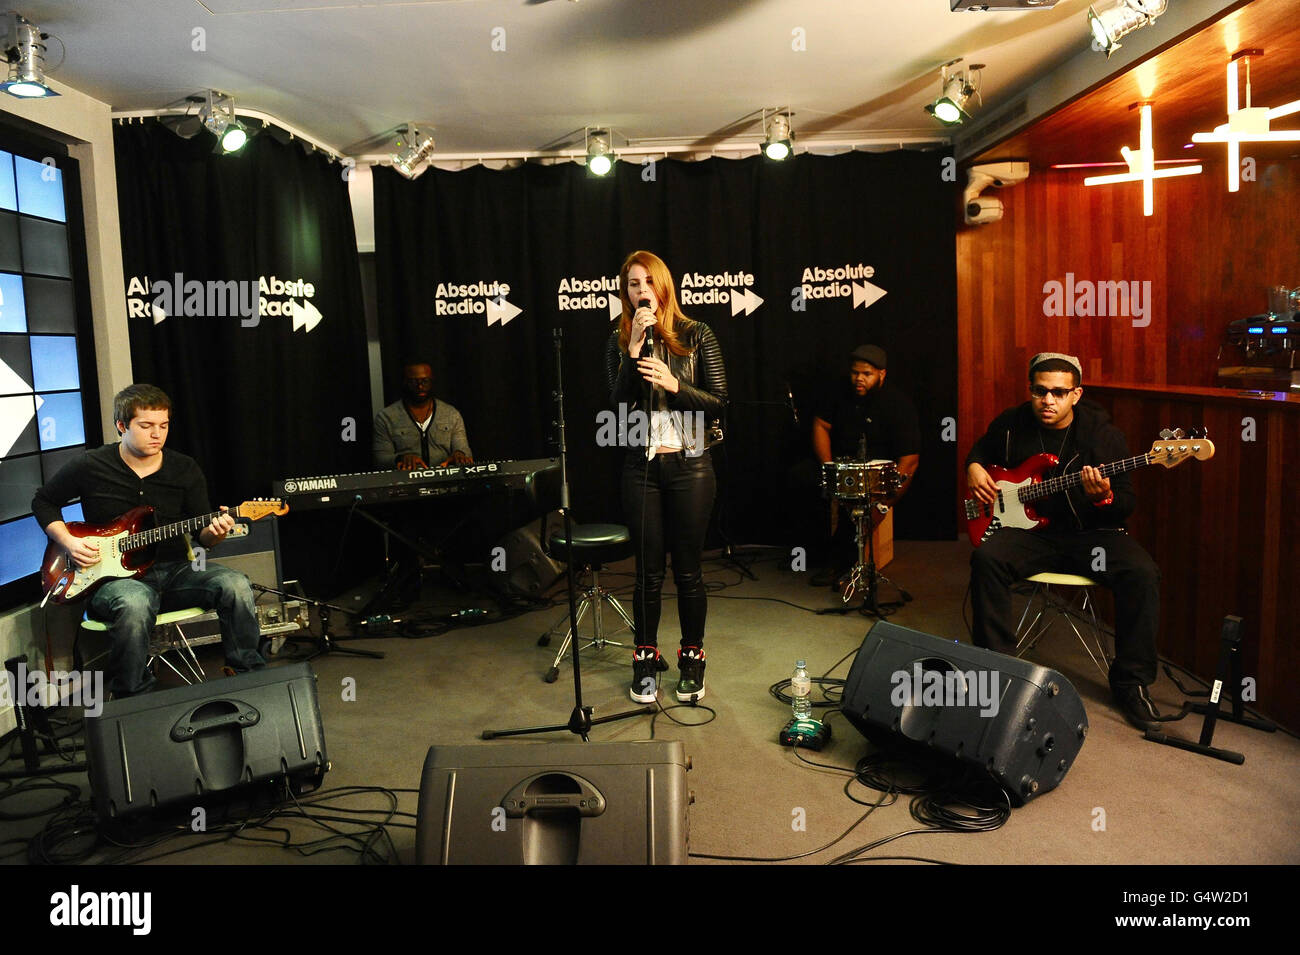 Lana Del Rey at Absolute Radio - London Stock Photo - Alamy